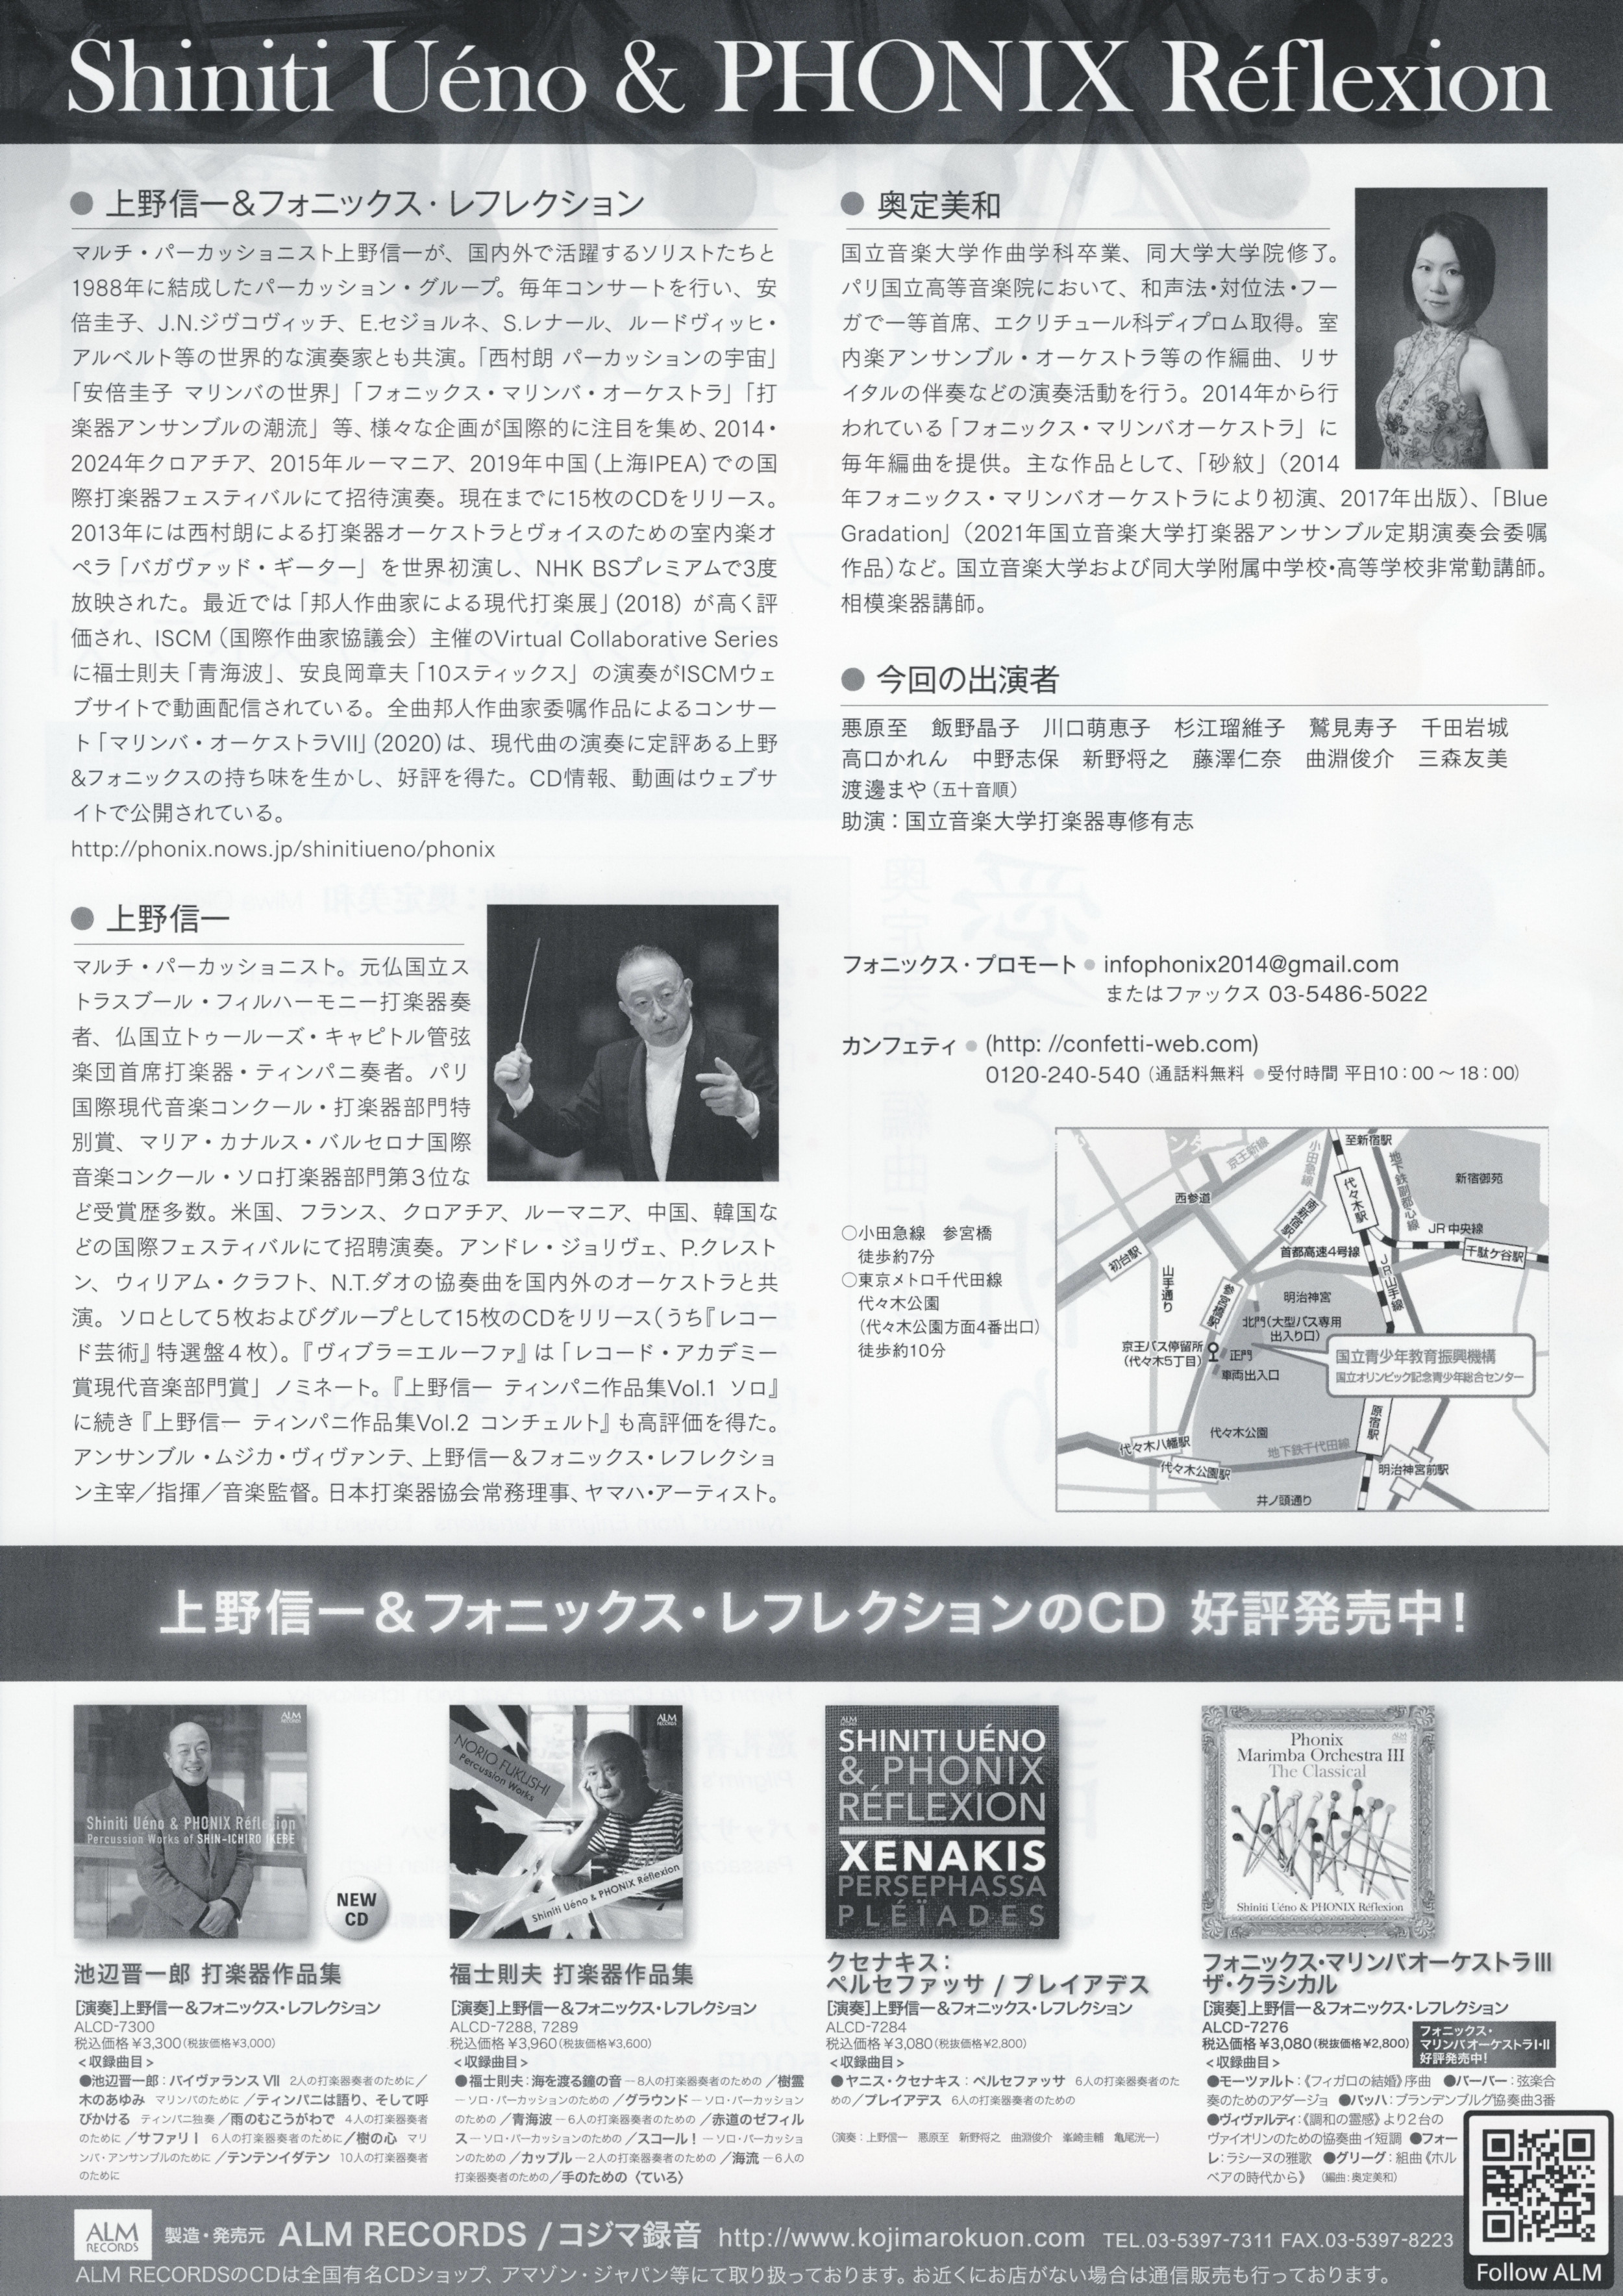 24-06-22 Marimba Orchestra XI Shiniti Ueno & PHONIX Reflexion 